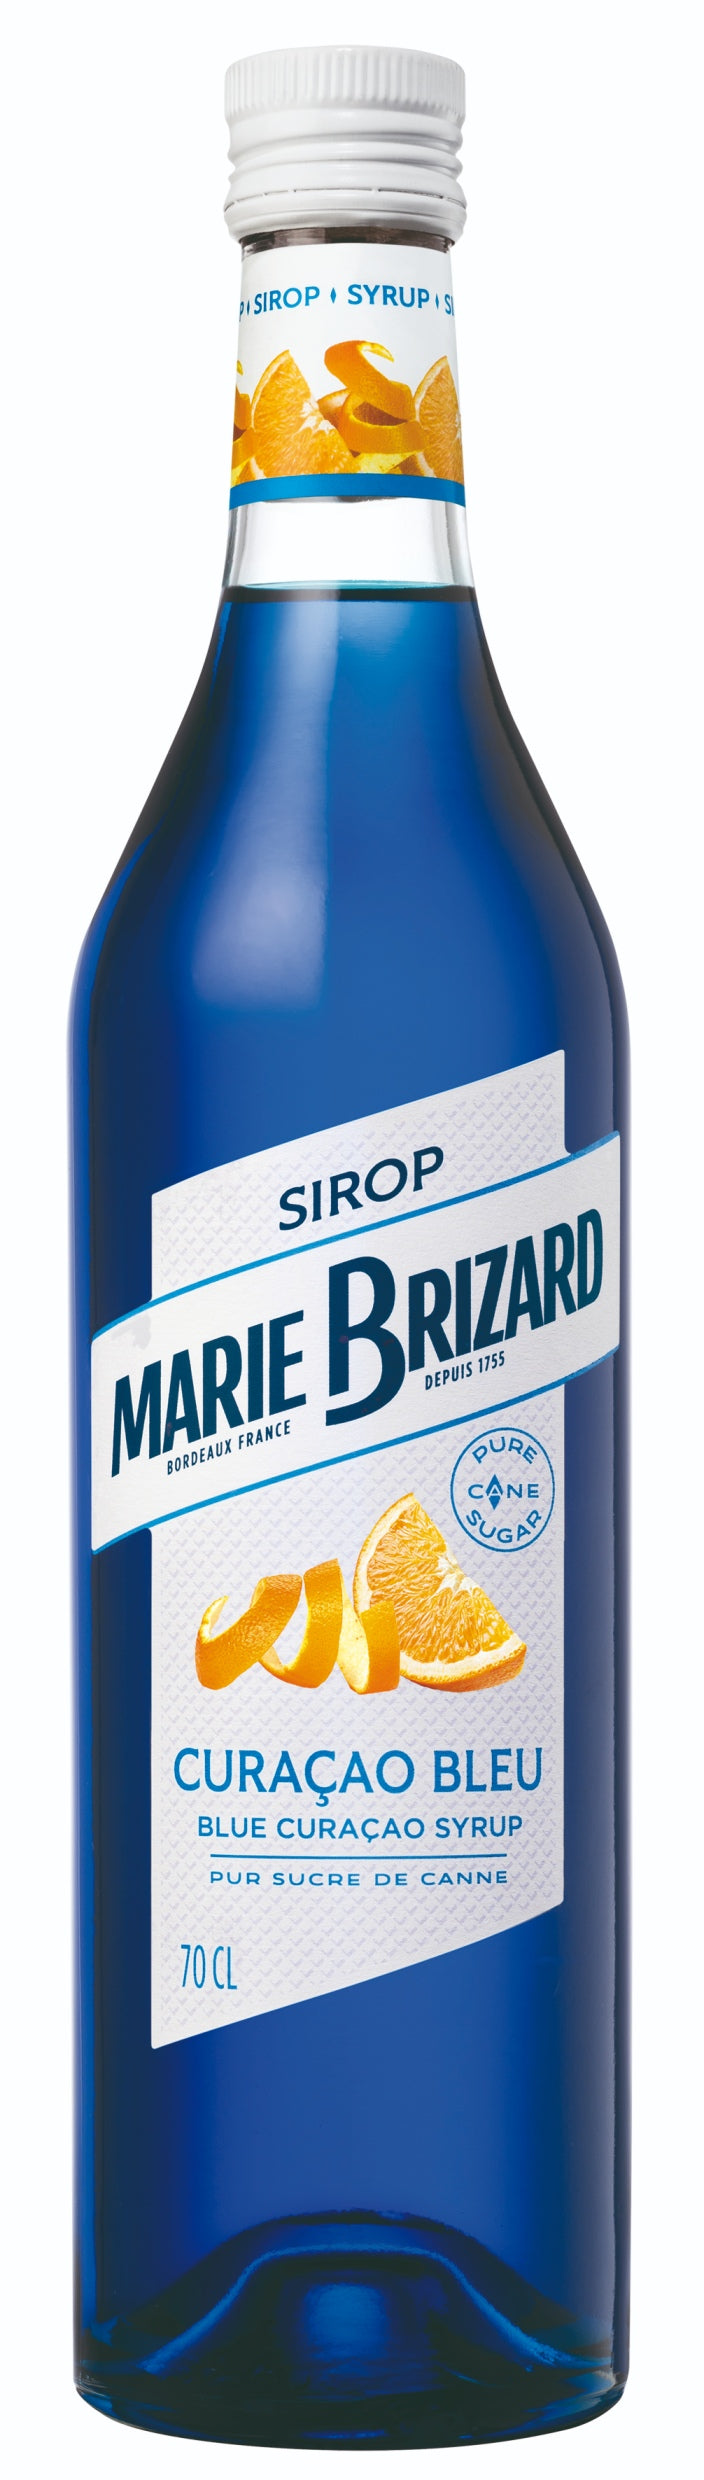 MARIE BRIZARD SIROP CURACAO BLEU 70CL